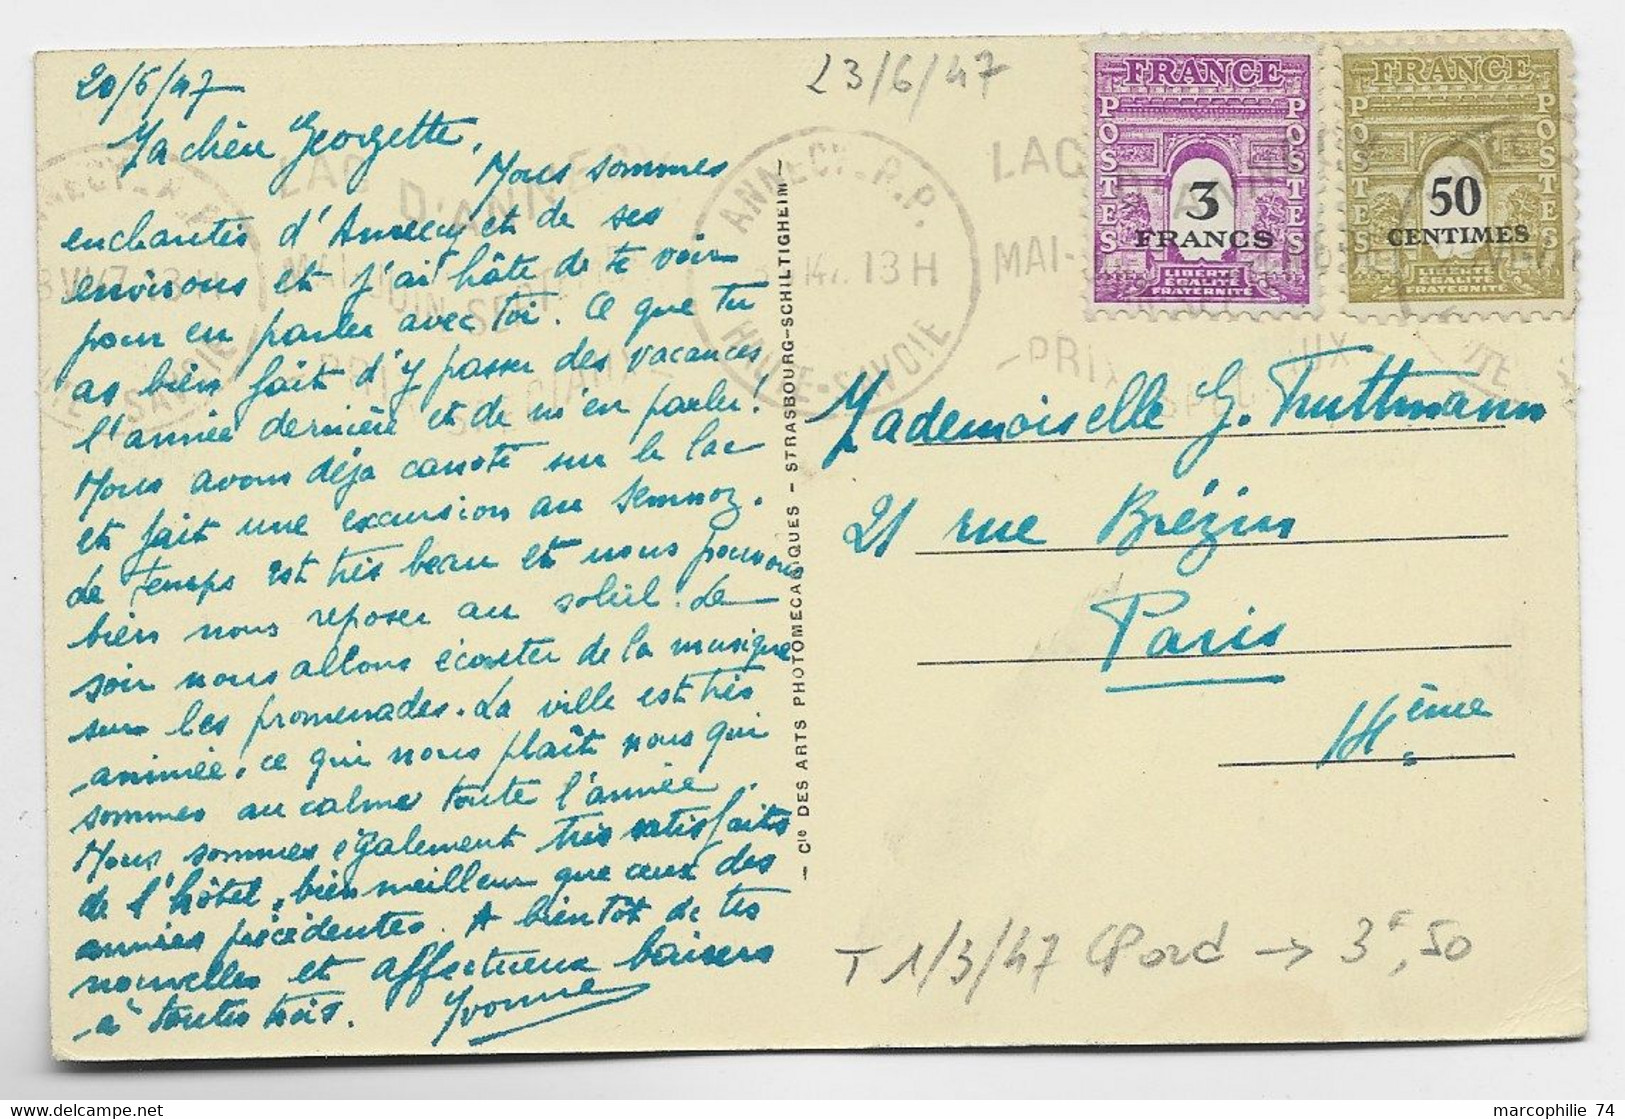 ARC TRIOMPHE 3FR+50C CARTE ANNECY RP 23.VI.1947 AU TARIF - 1944-45 Arco Del Triunfo